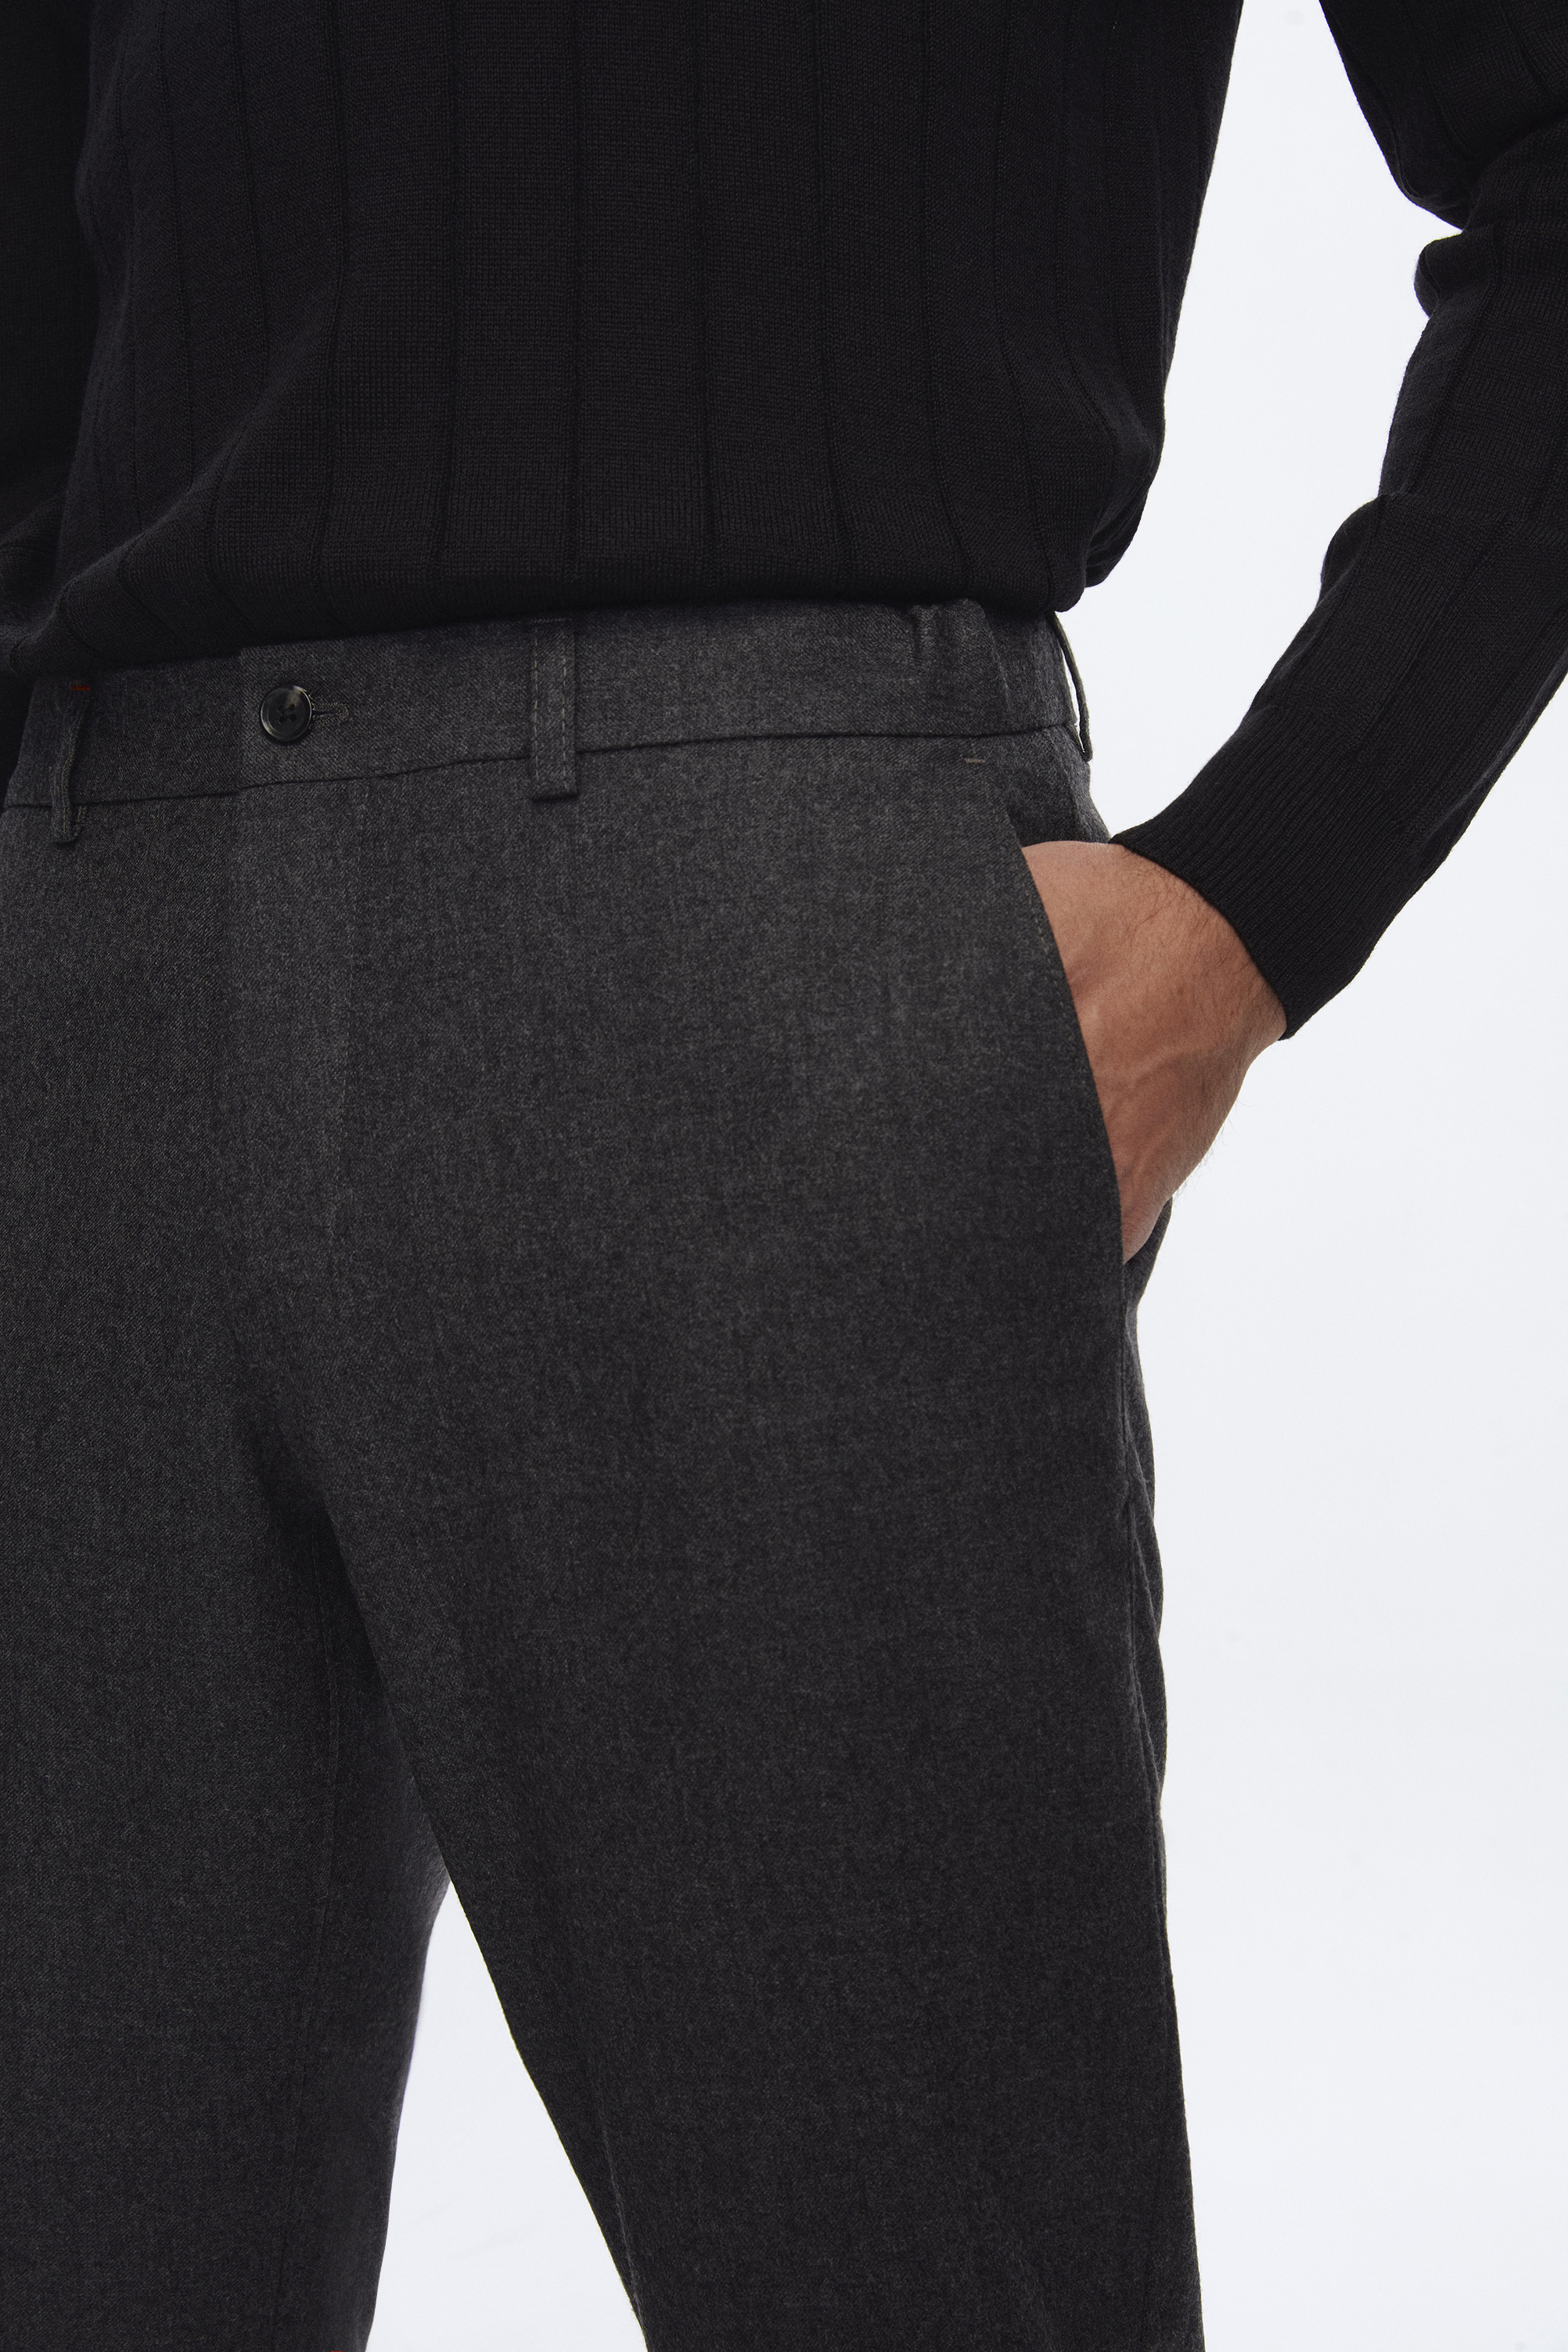 Damat Tween Damat Slim Fit Antrasit Düz %100 Yün Chino Pantolon. 3